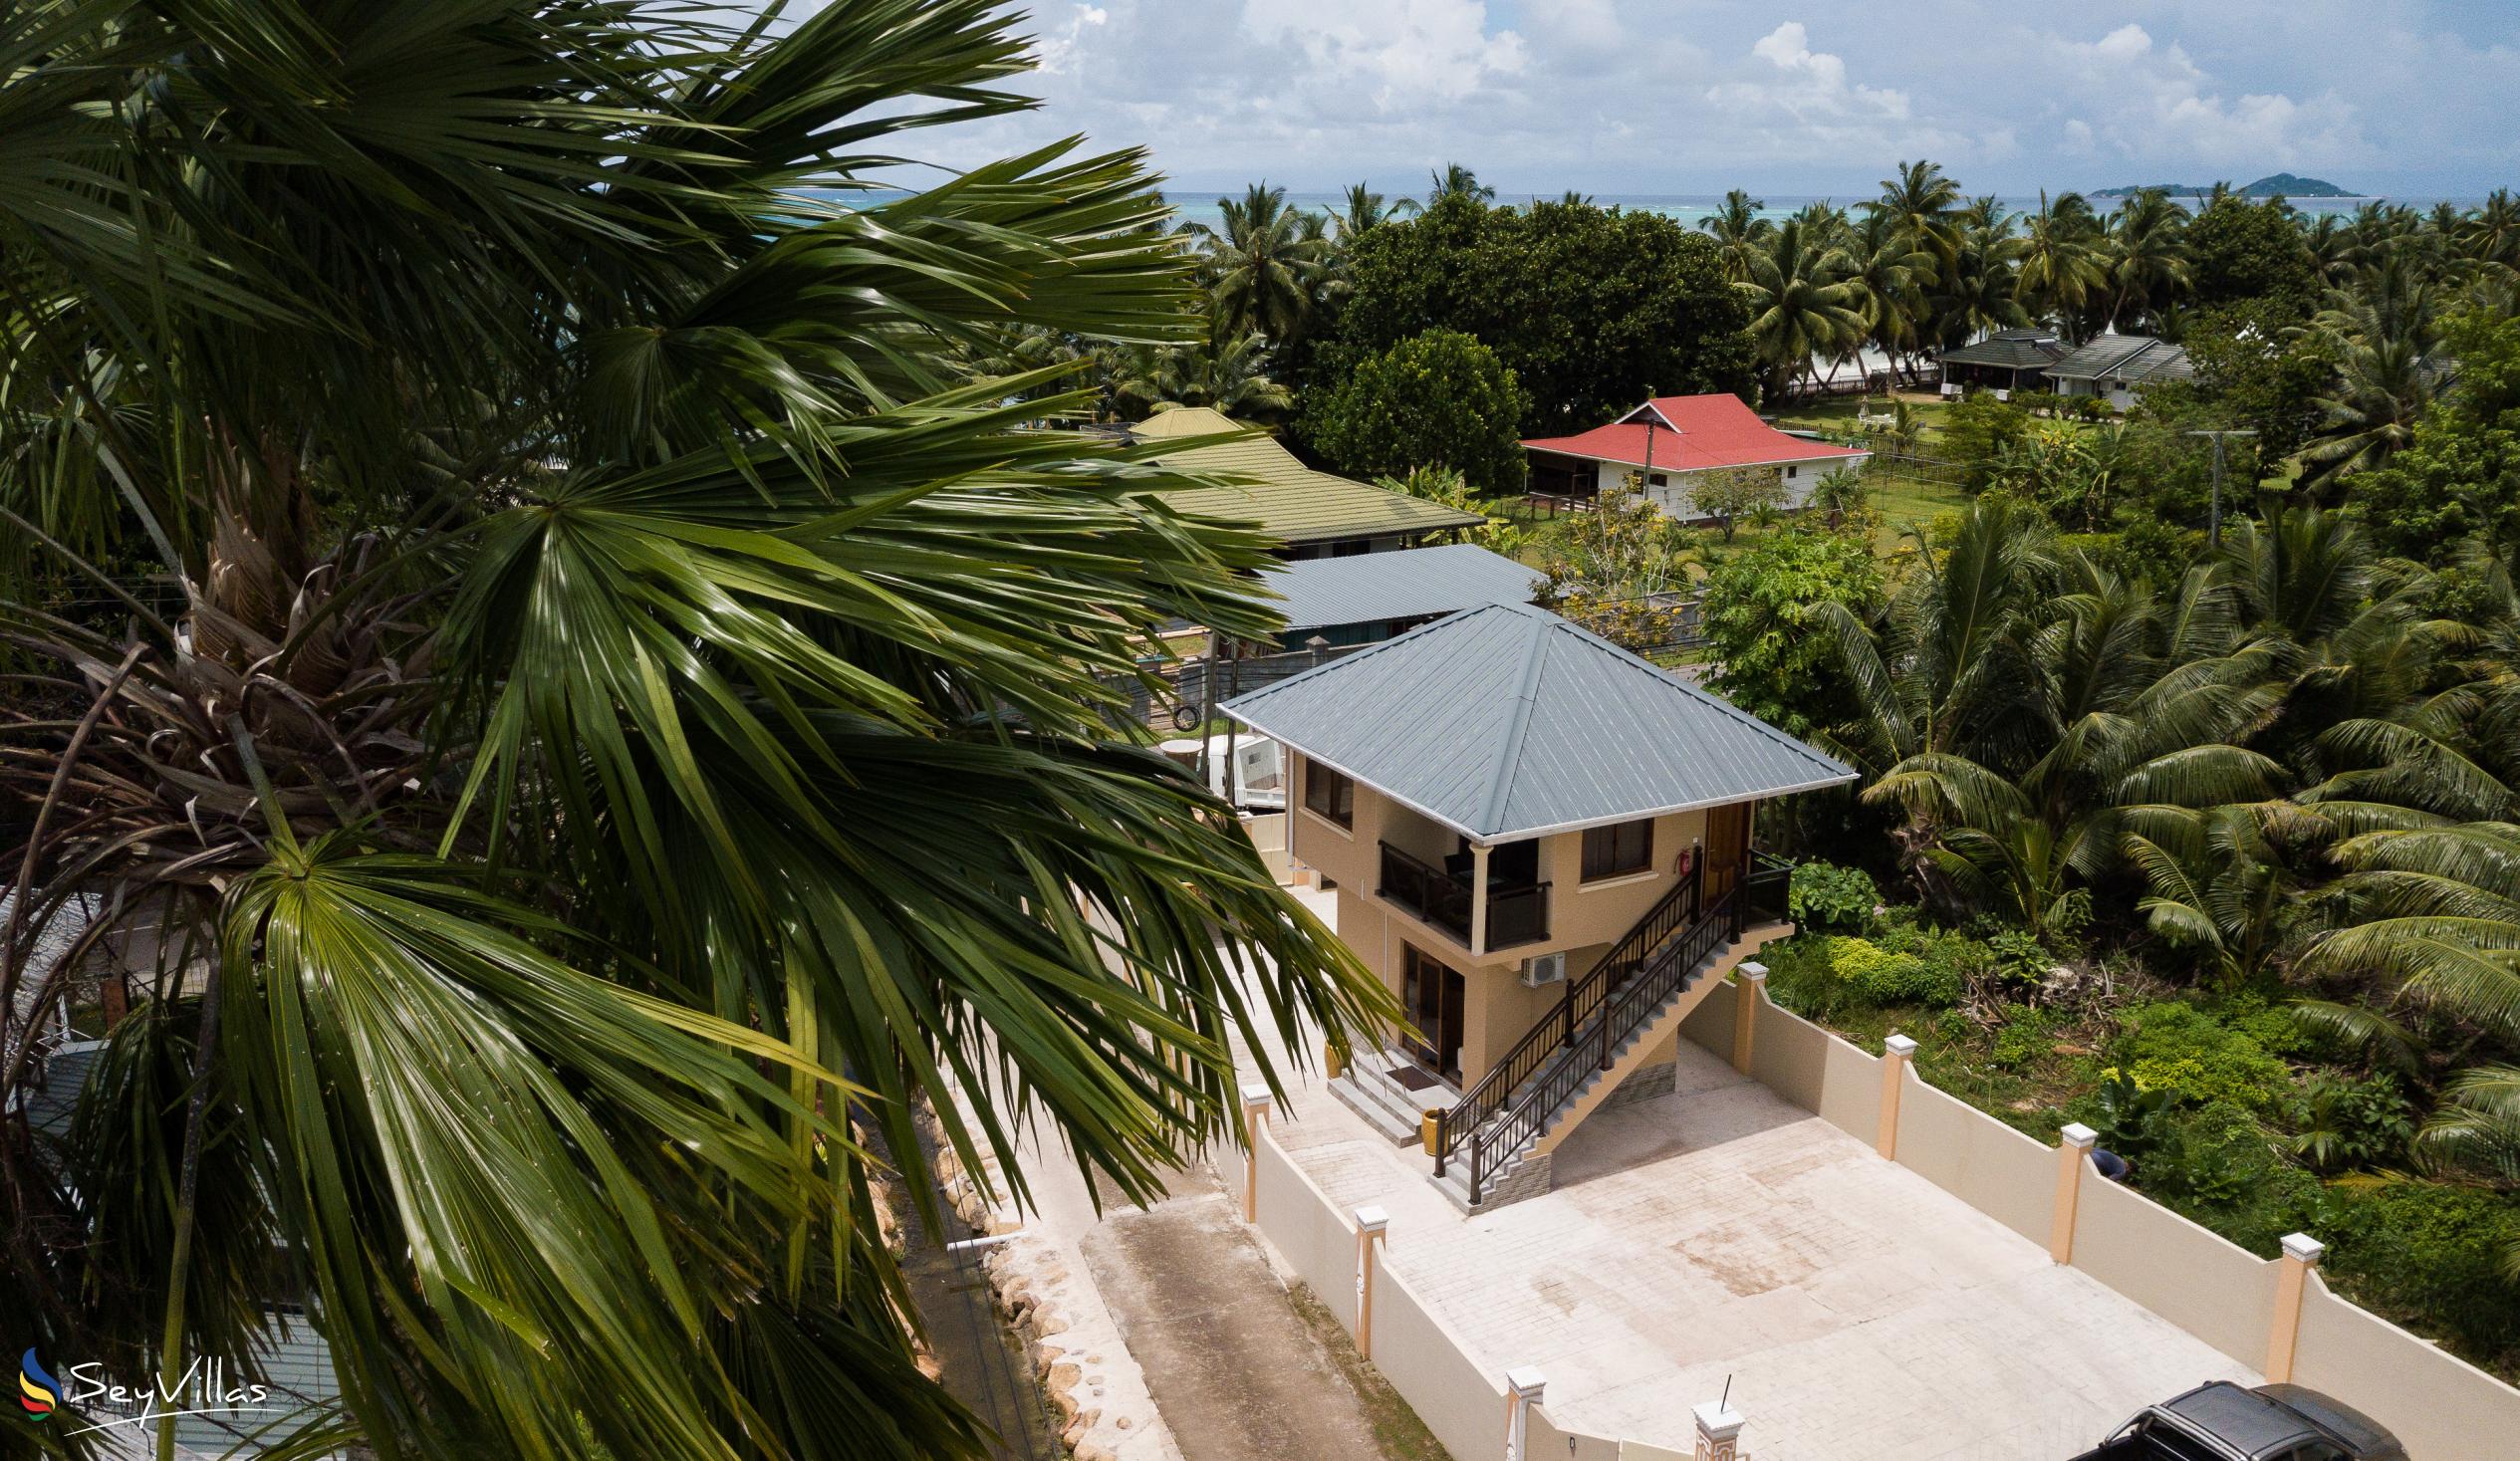 Photo 21: Stone Self Catering Apartments - Location - Praslin (Seychelles)